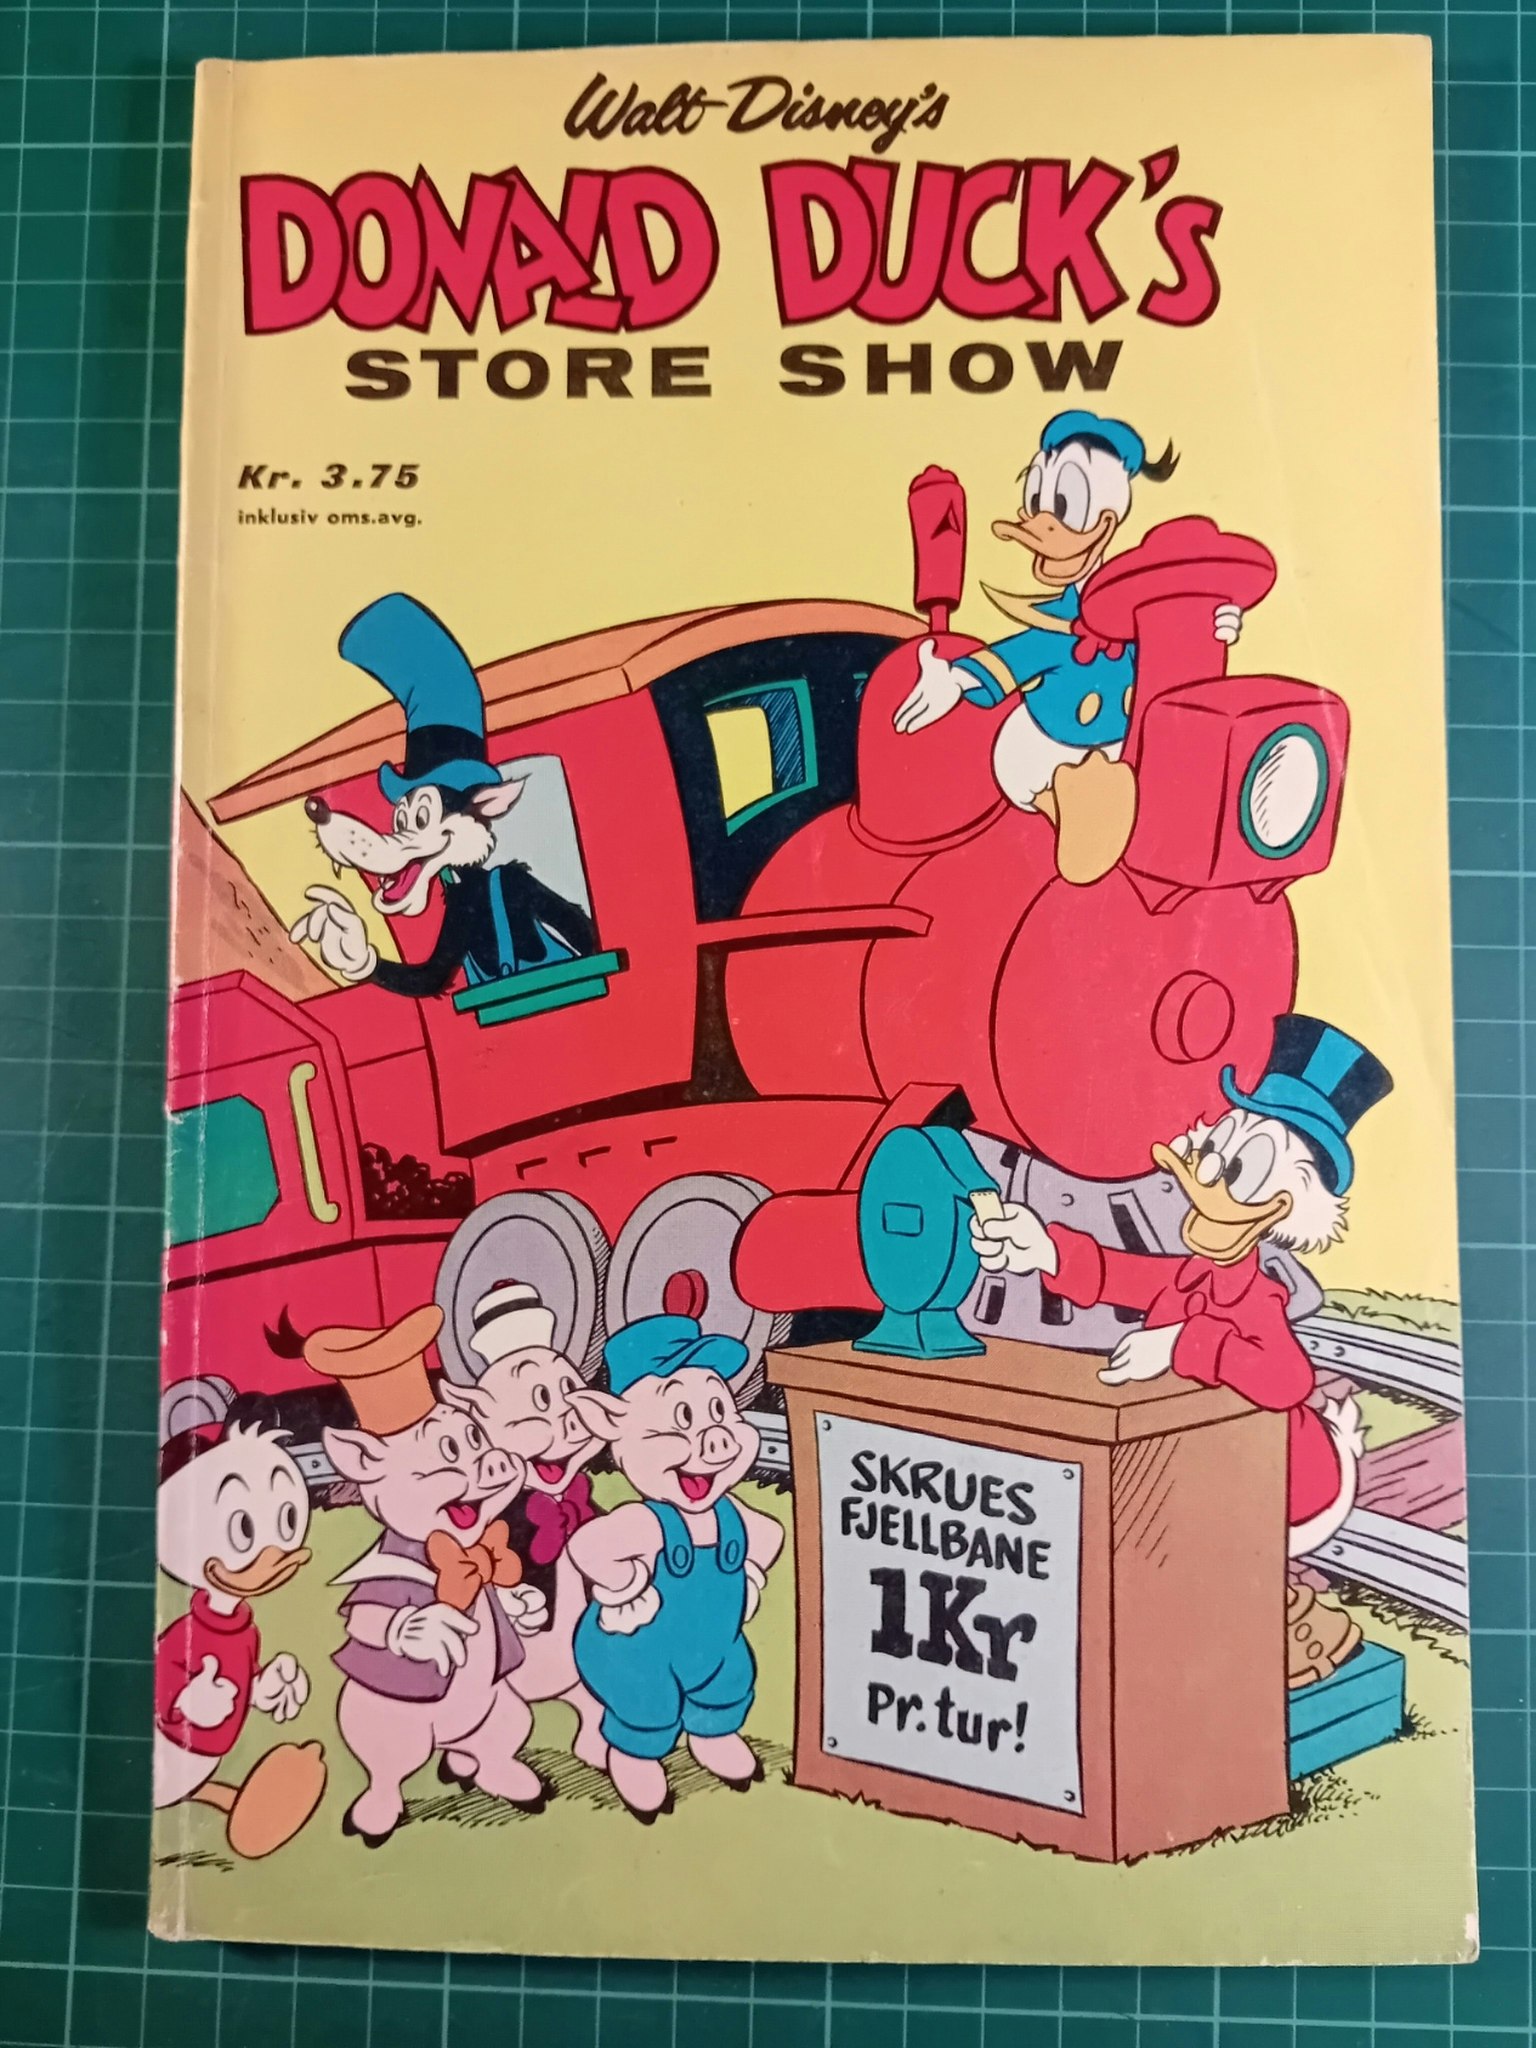 Donald Ducks 1966 Store show